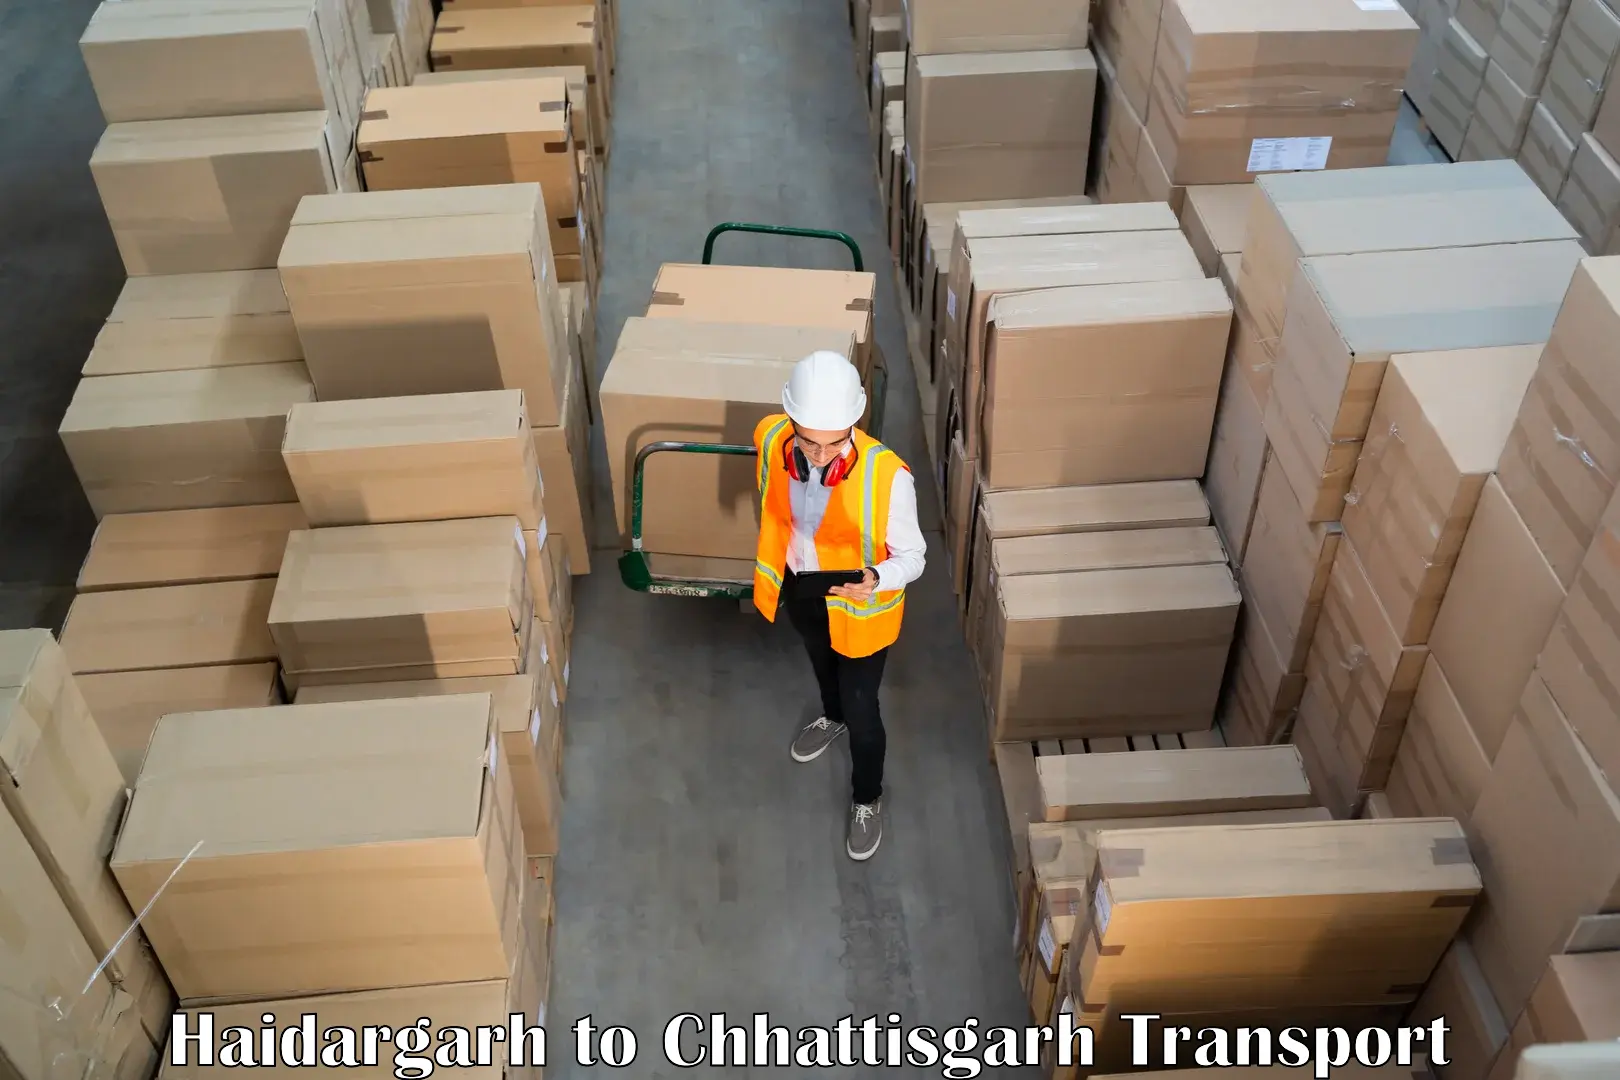 Truck transport companies in India Haidargarh to Mandhar